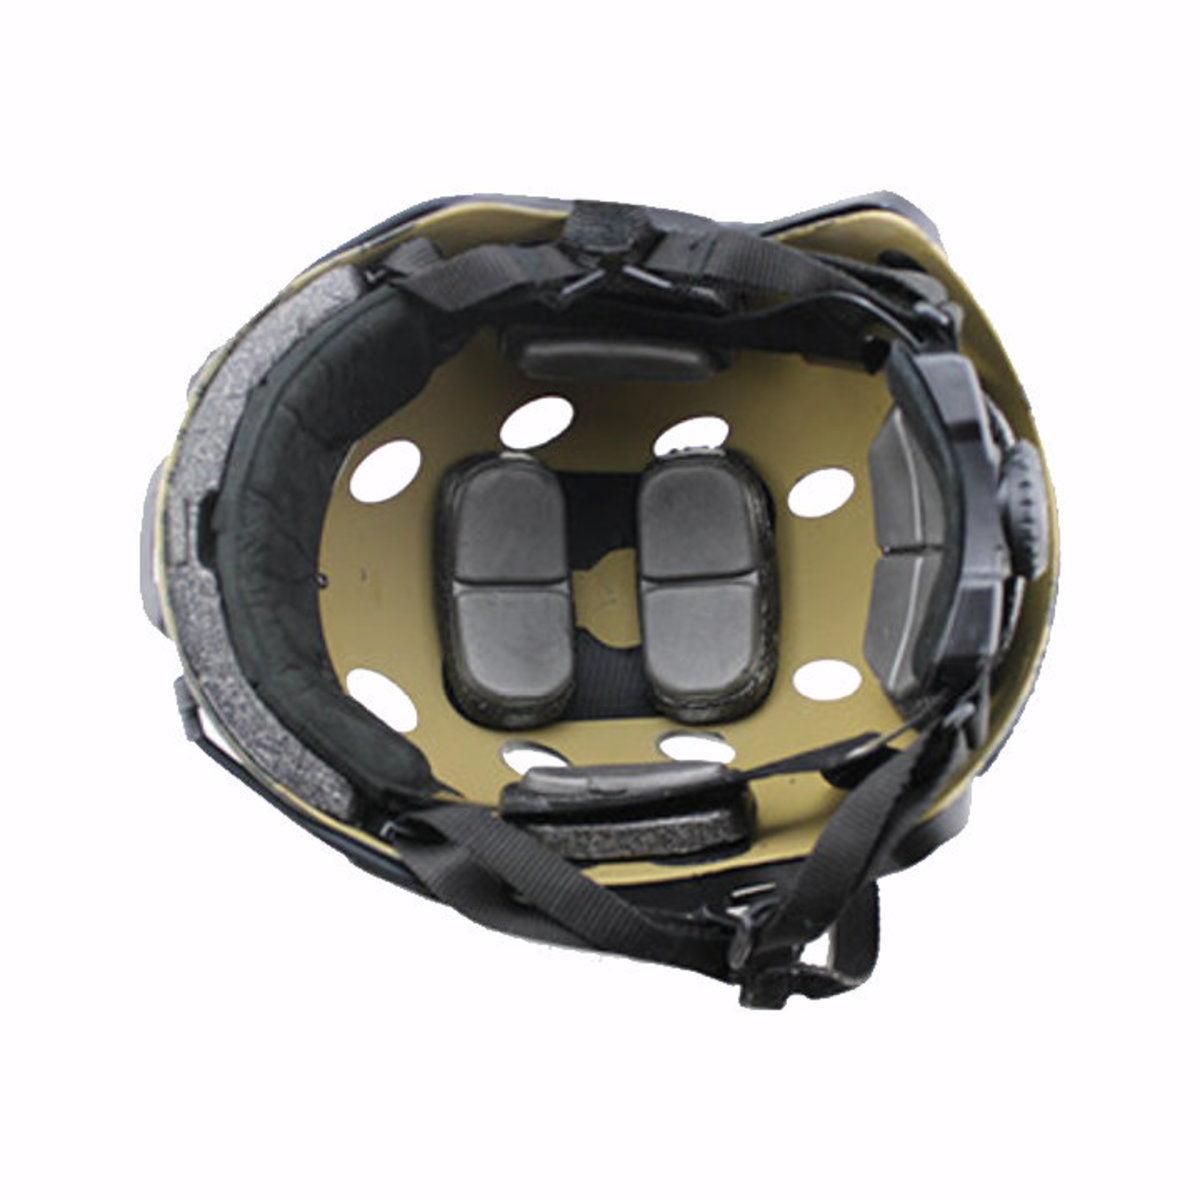 Valken ATH Enhanced Tactical Airsoft Helmet - Tan - Valken